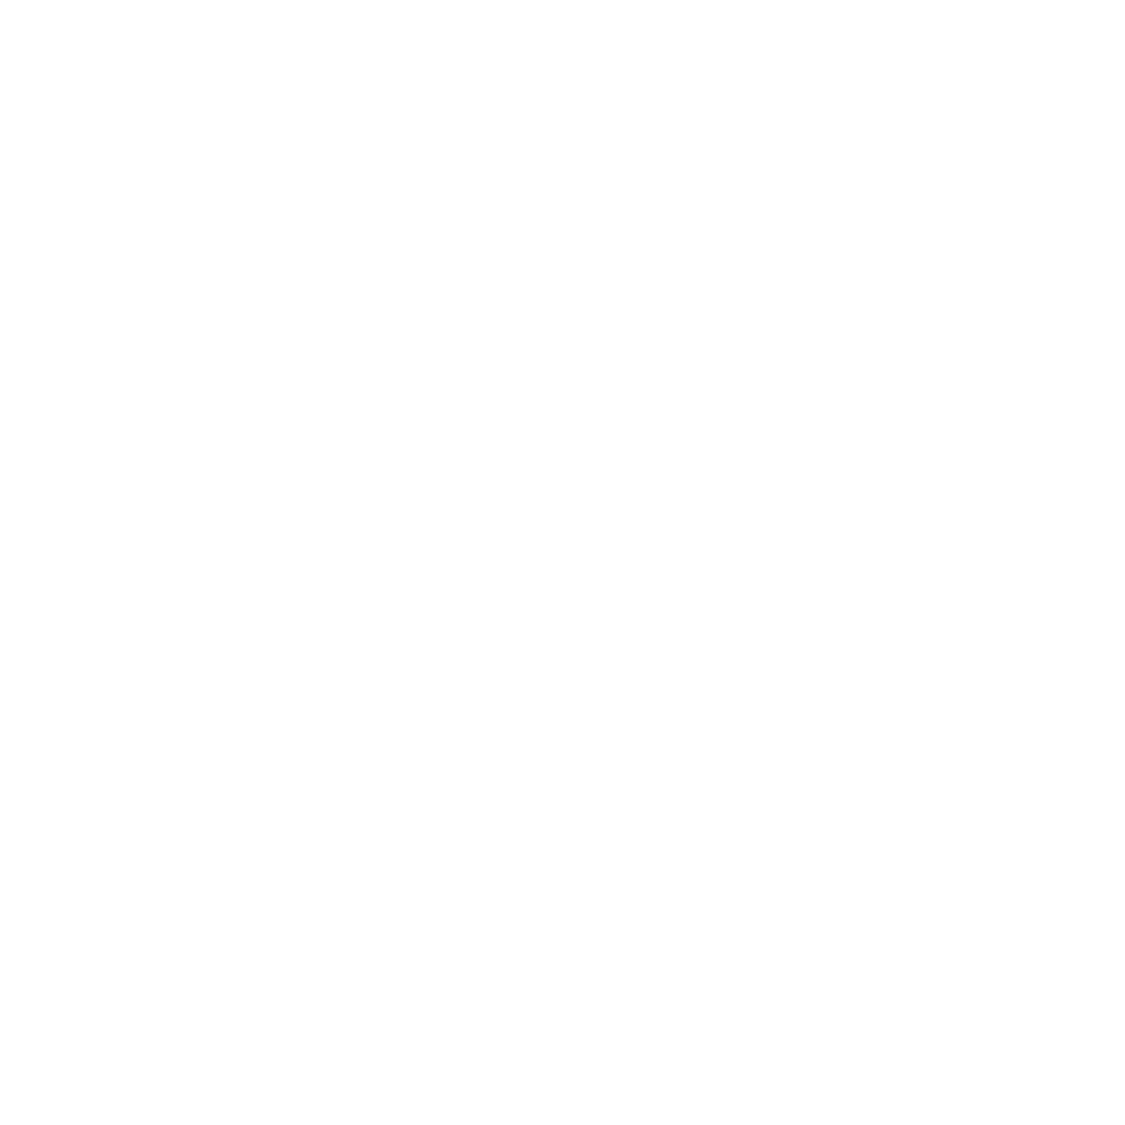 5 Stone Ranch